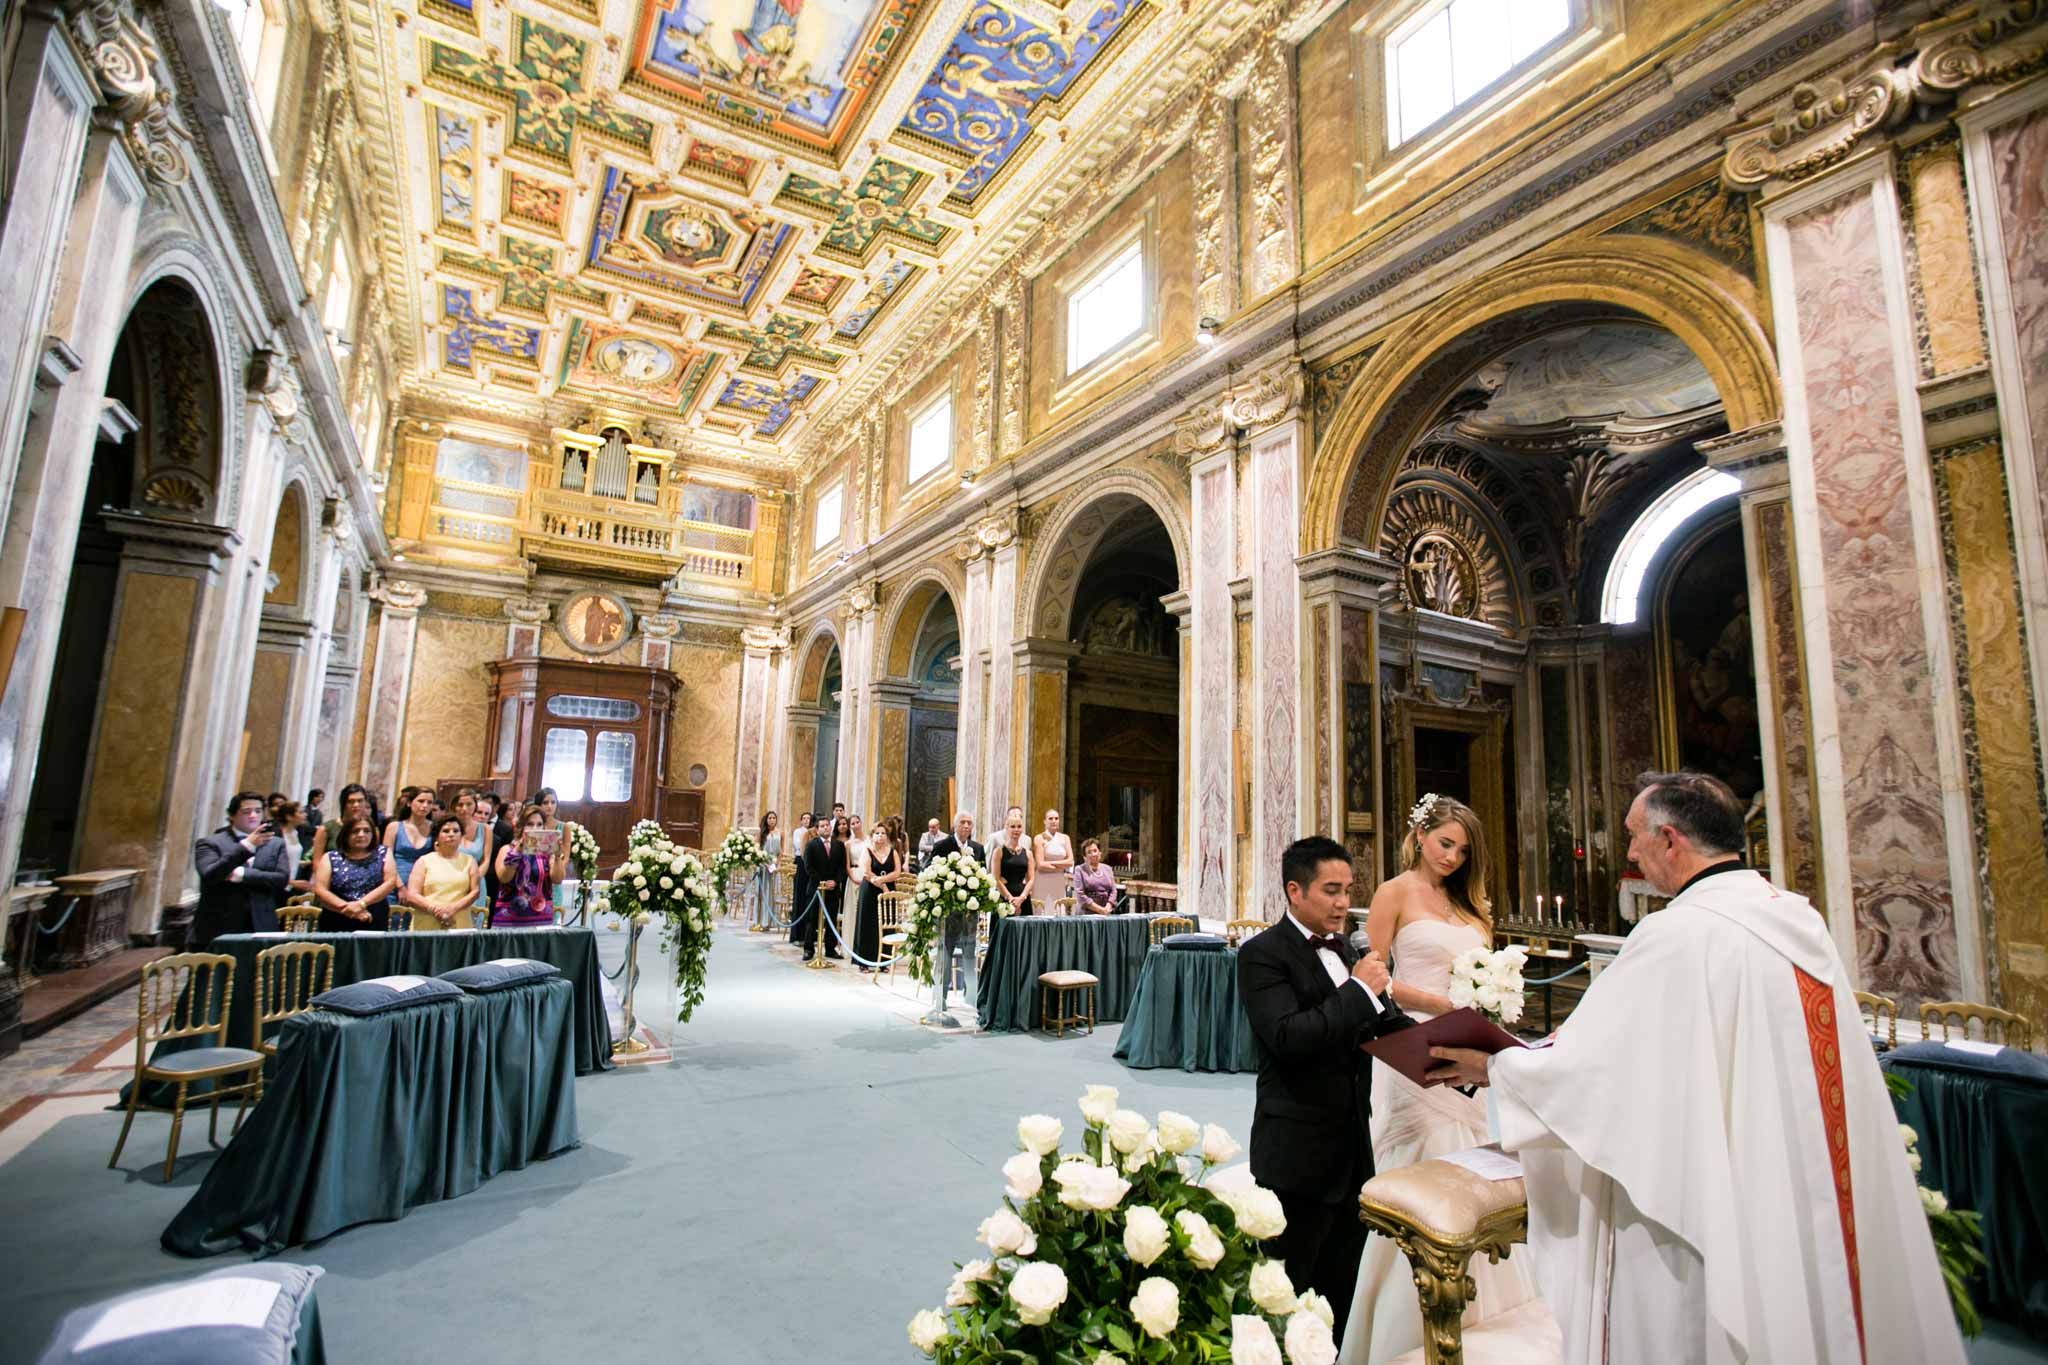 GETTING MARRIED IN ITALY: THE “MATRIMONIO CONCORDATARIO”